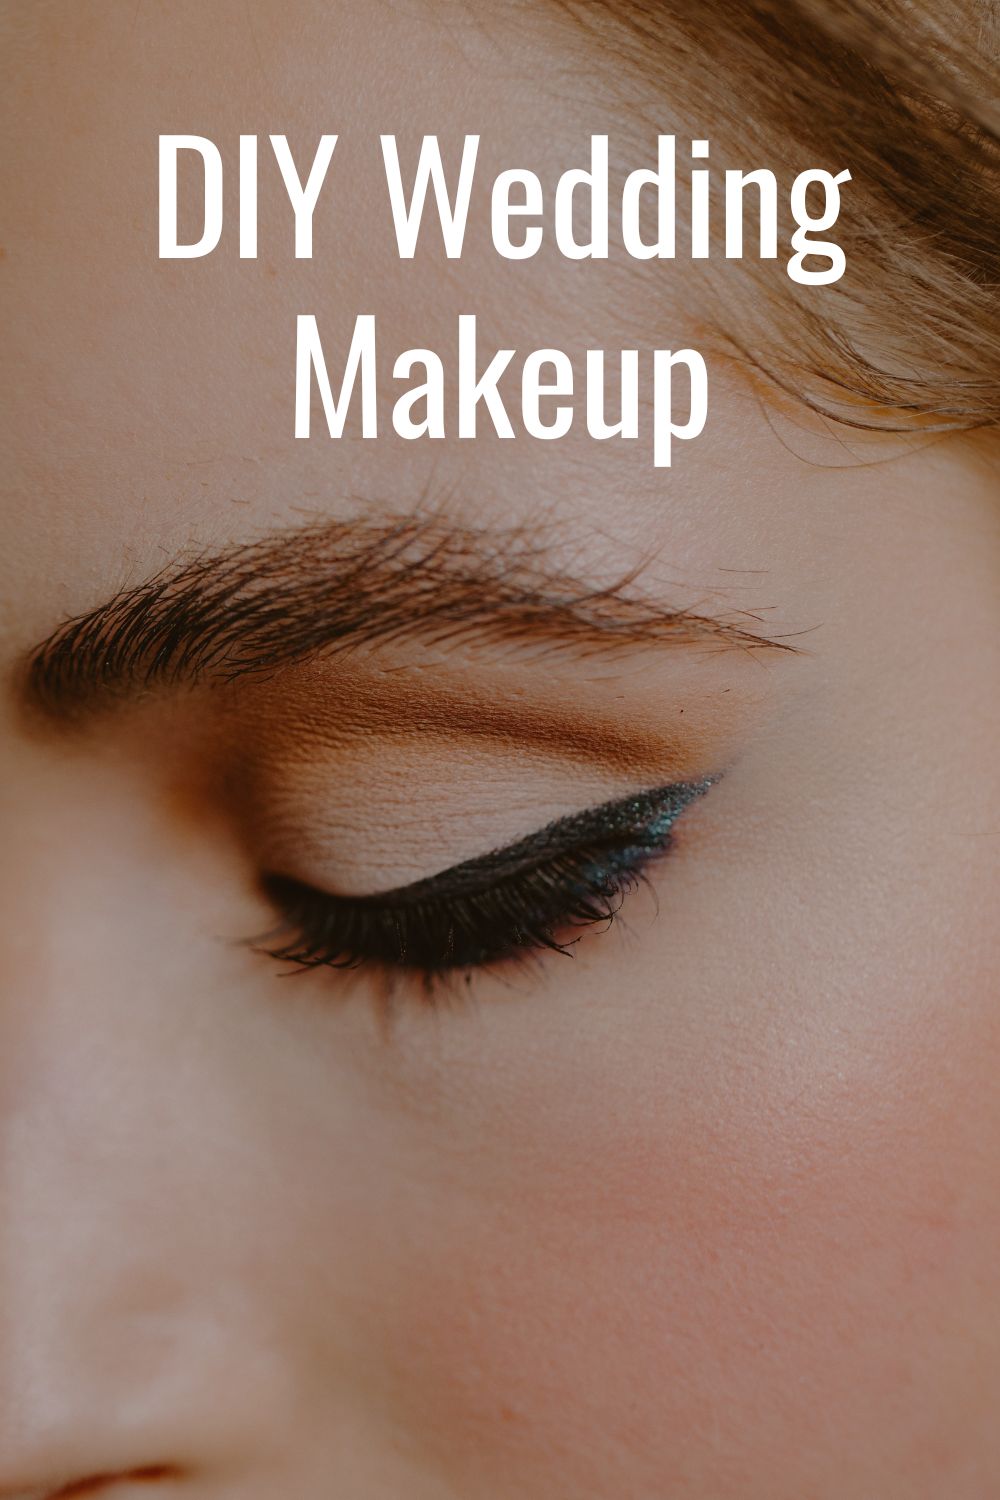 DIY wedding makeup eyes and foundation